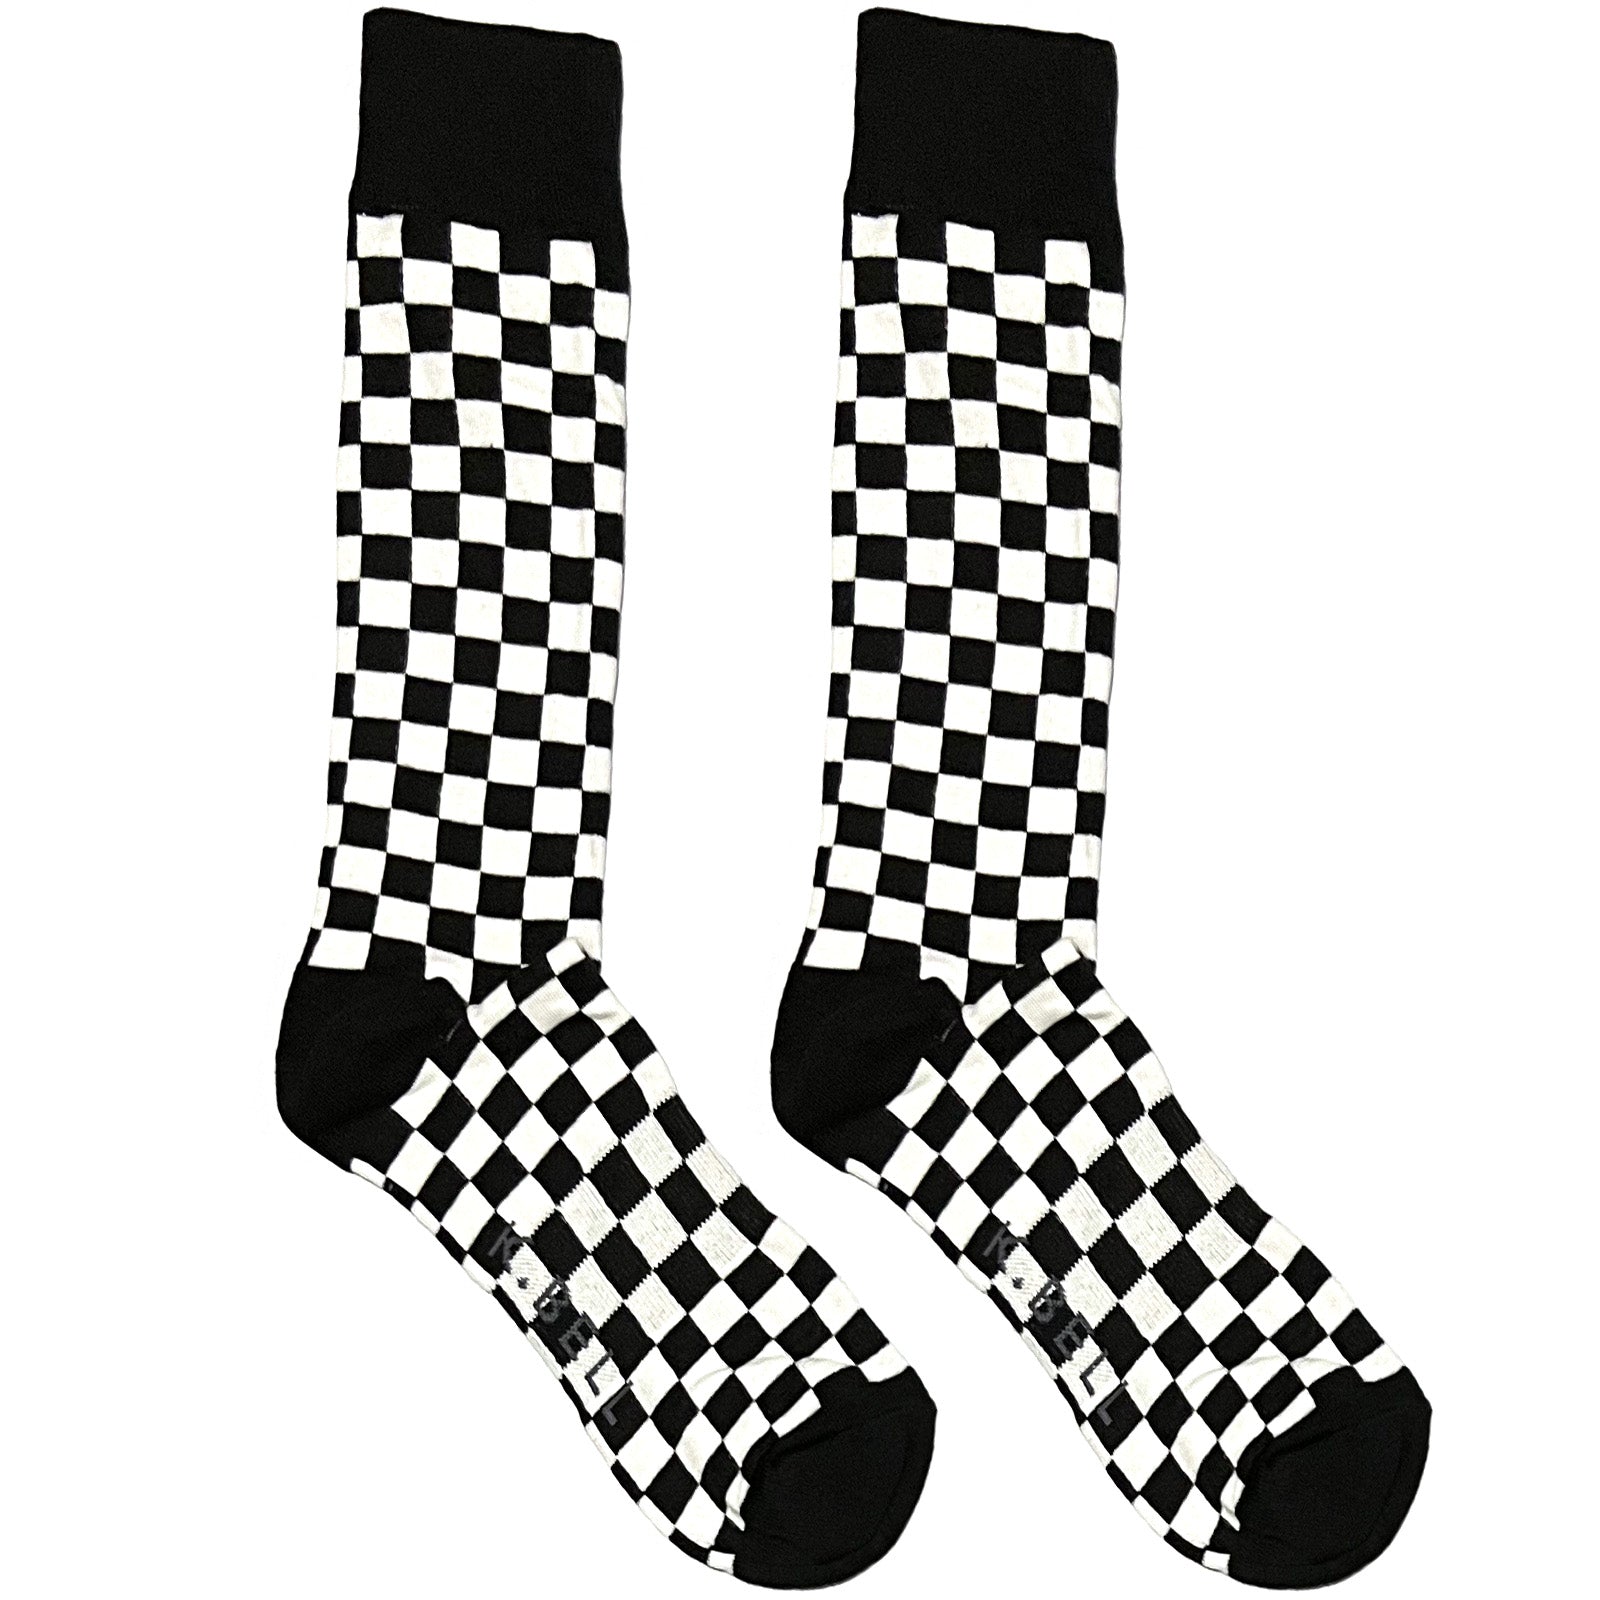 Black And White Chequered Socks